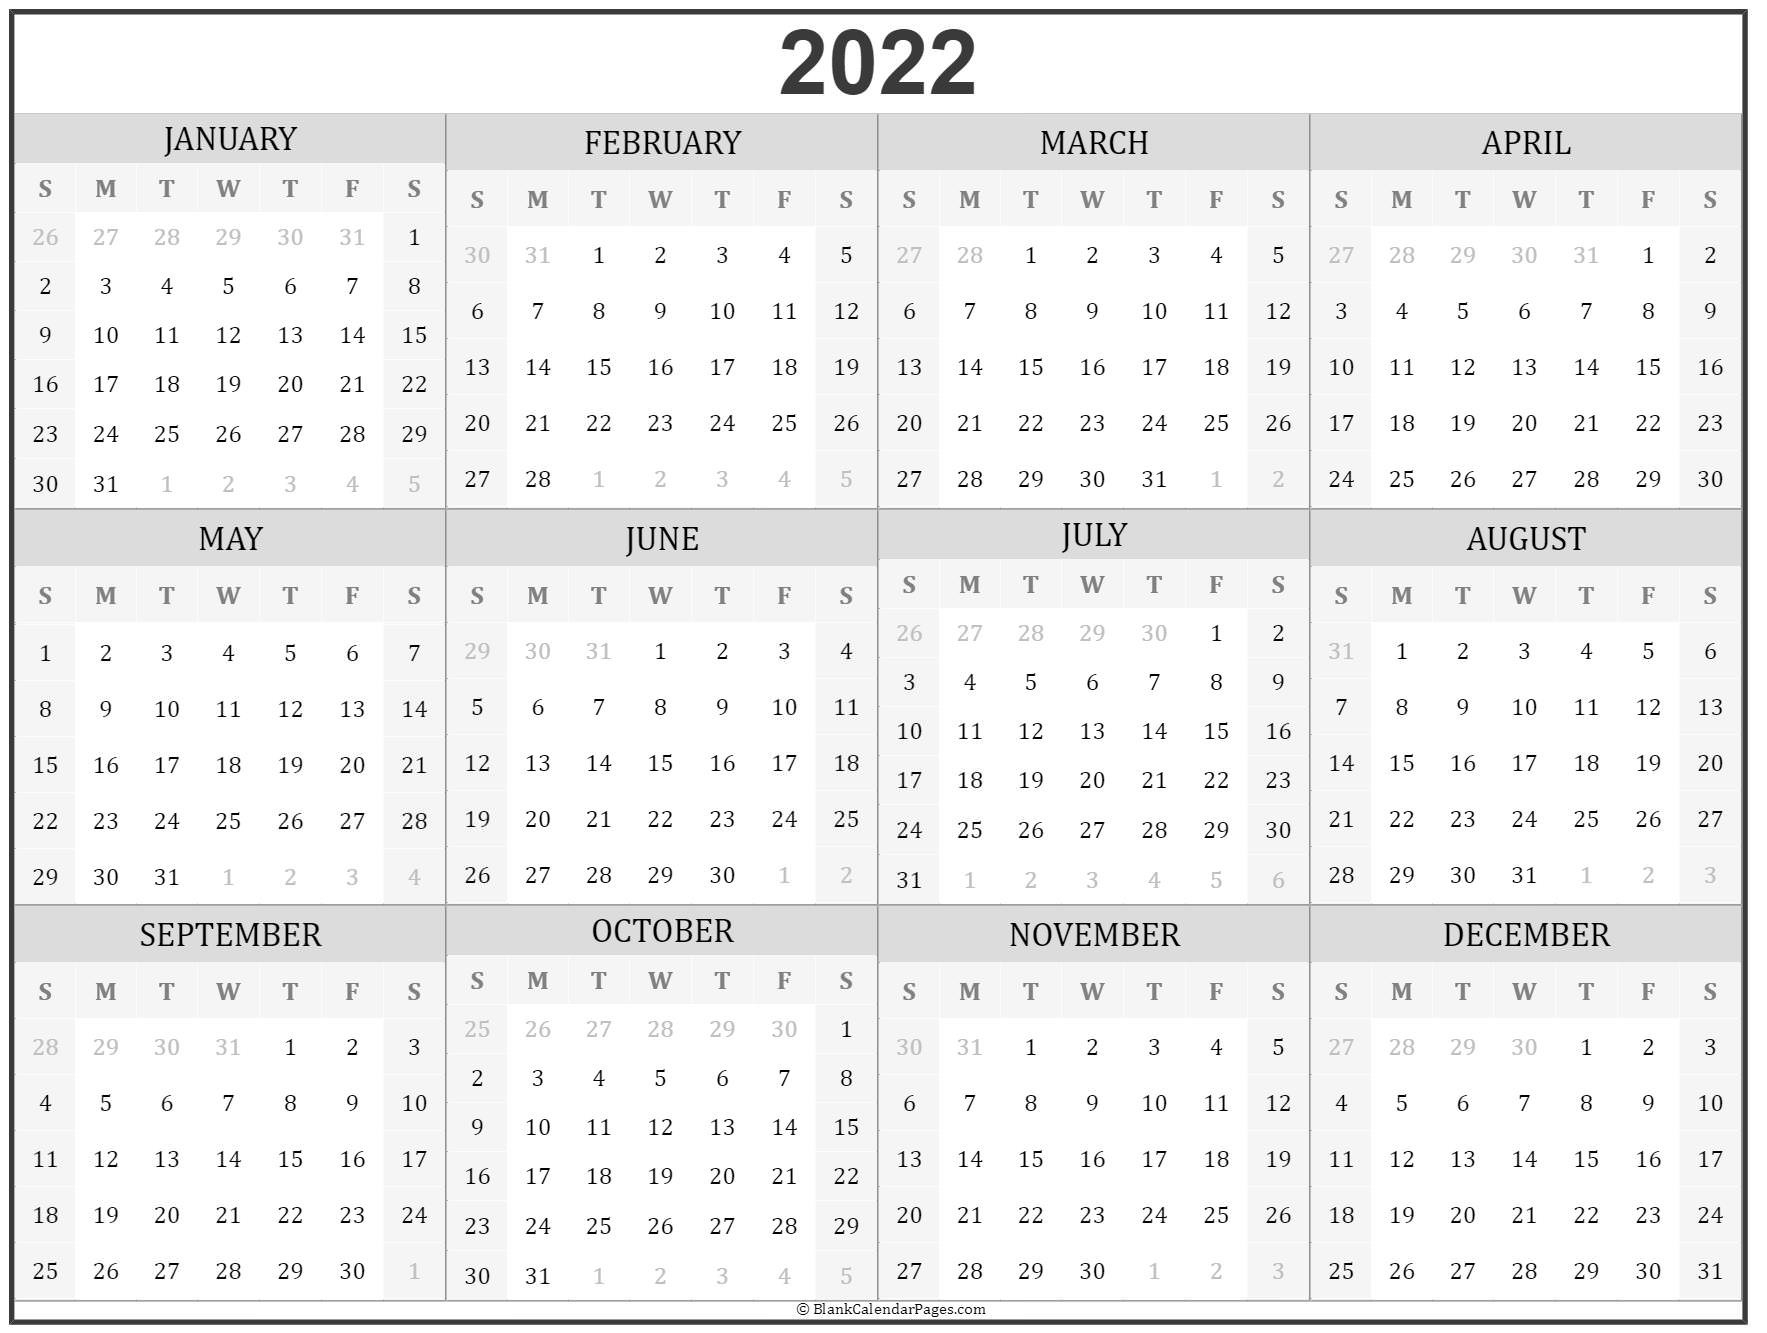 2022 Year Calendar | Yearly Printable-2022 Calendar At A Glance Printable